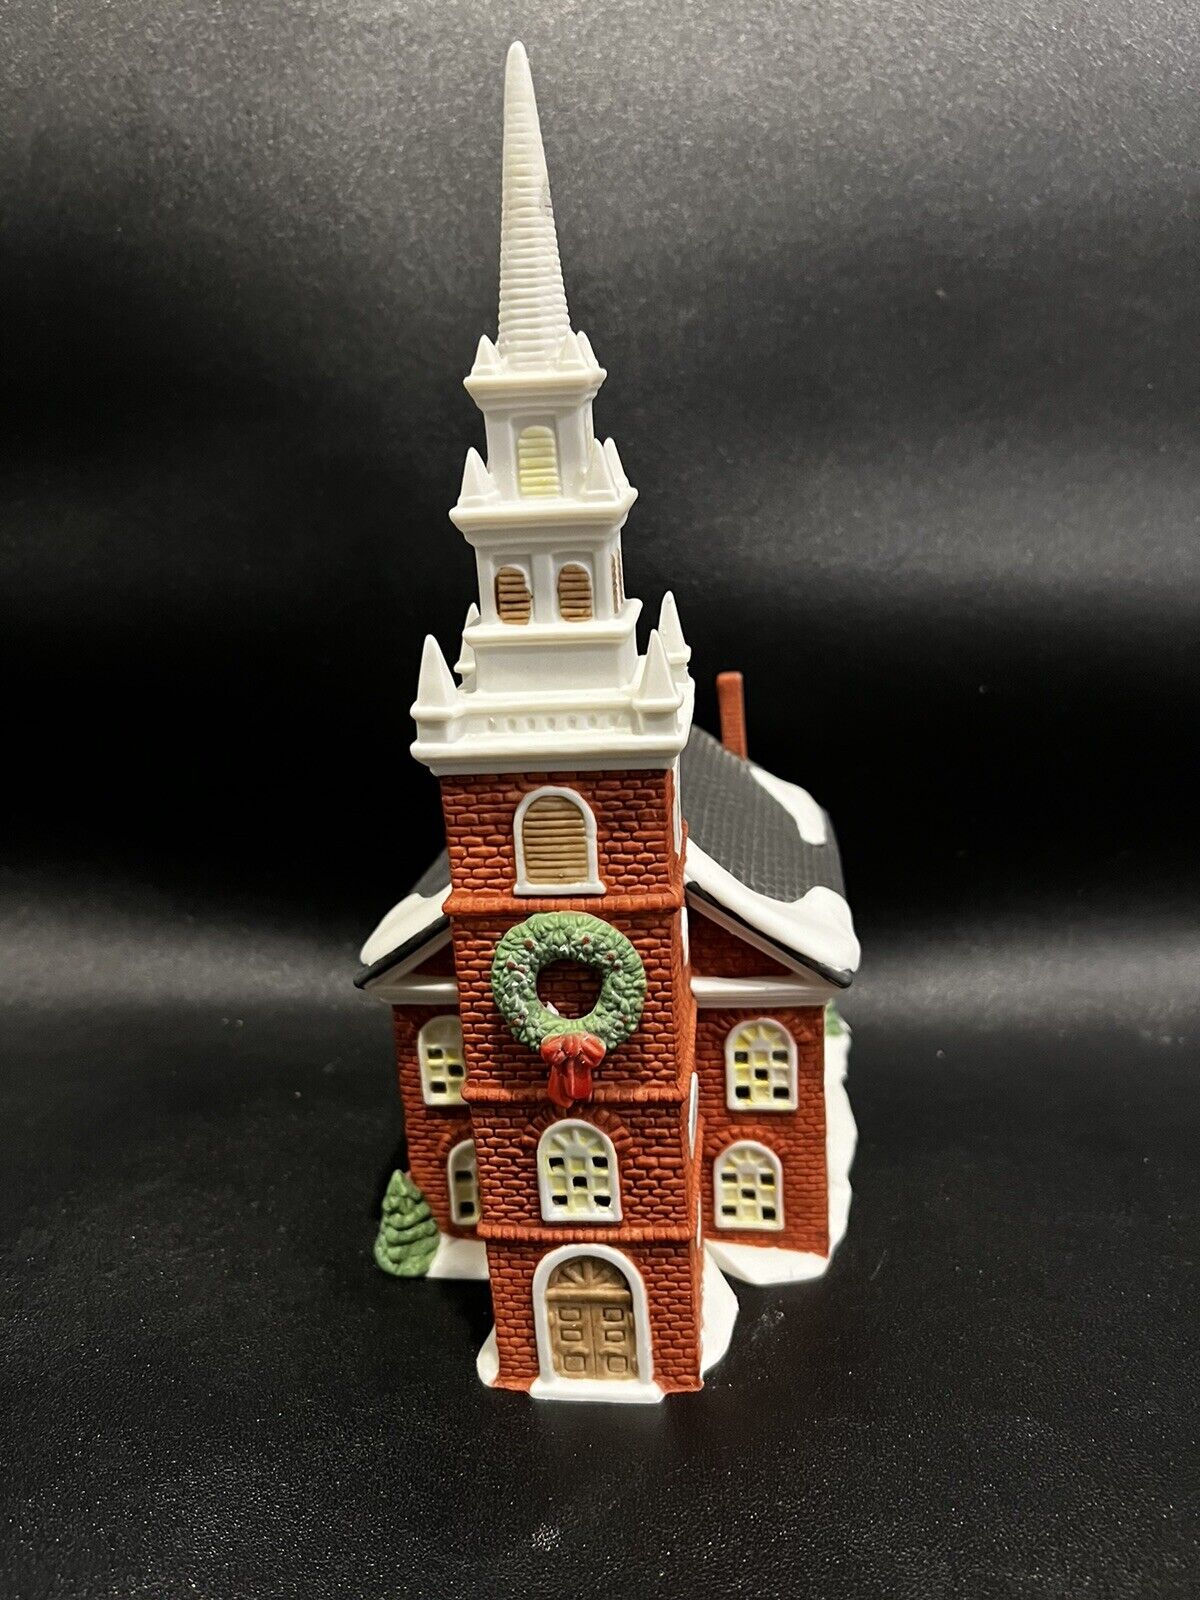 Dept 56 New England Village “Old North Church” #5932-3, 1988 Retired